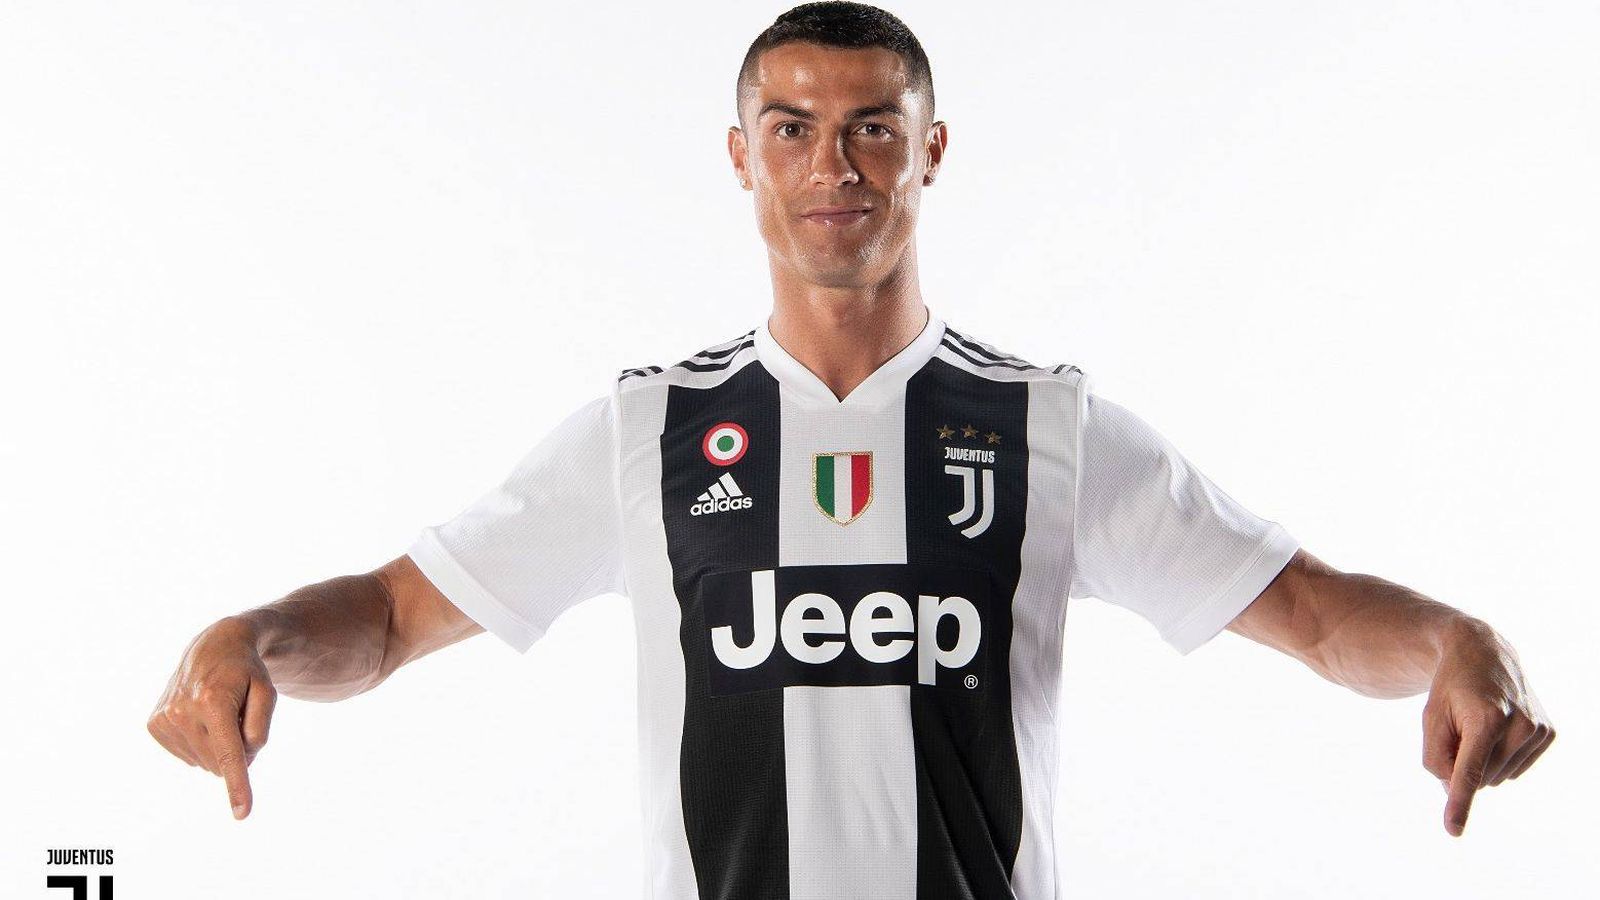 alias autómata Saco El pelotazo de Adidas con el fichaje de Cristiano Ronaldo por la Juventus